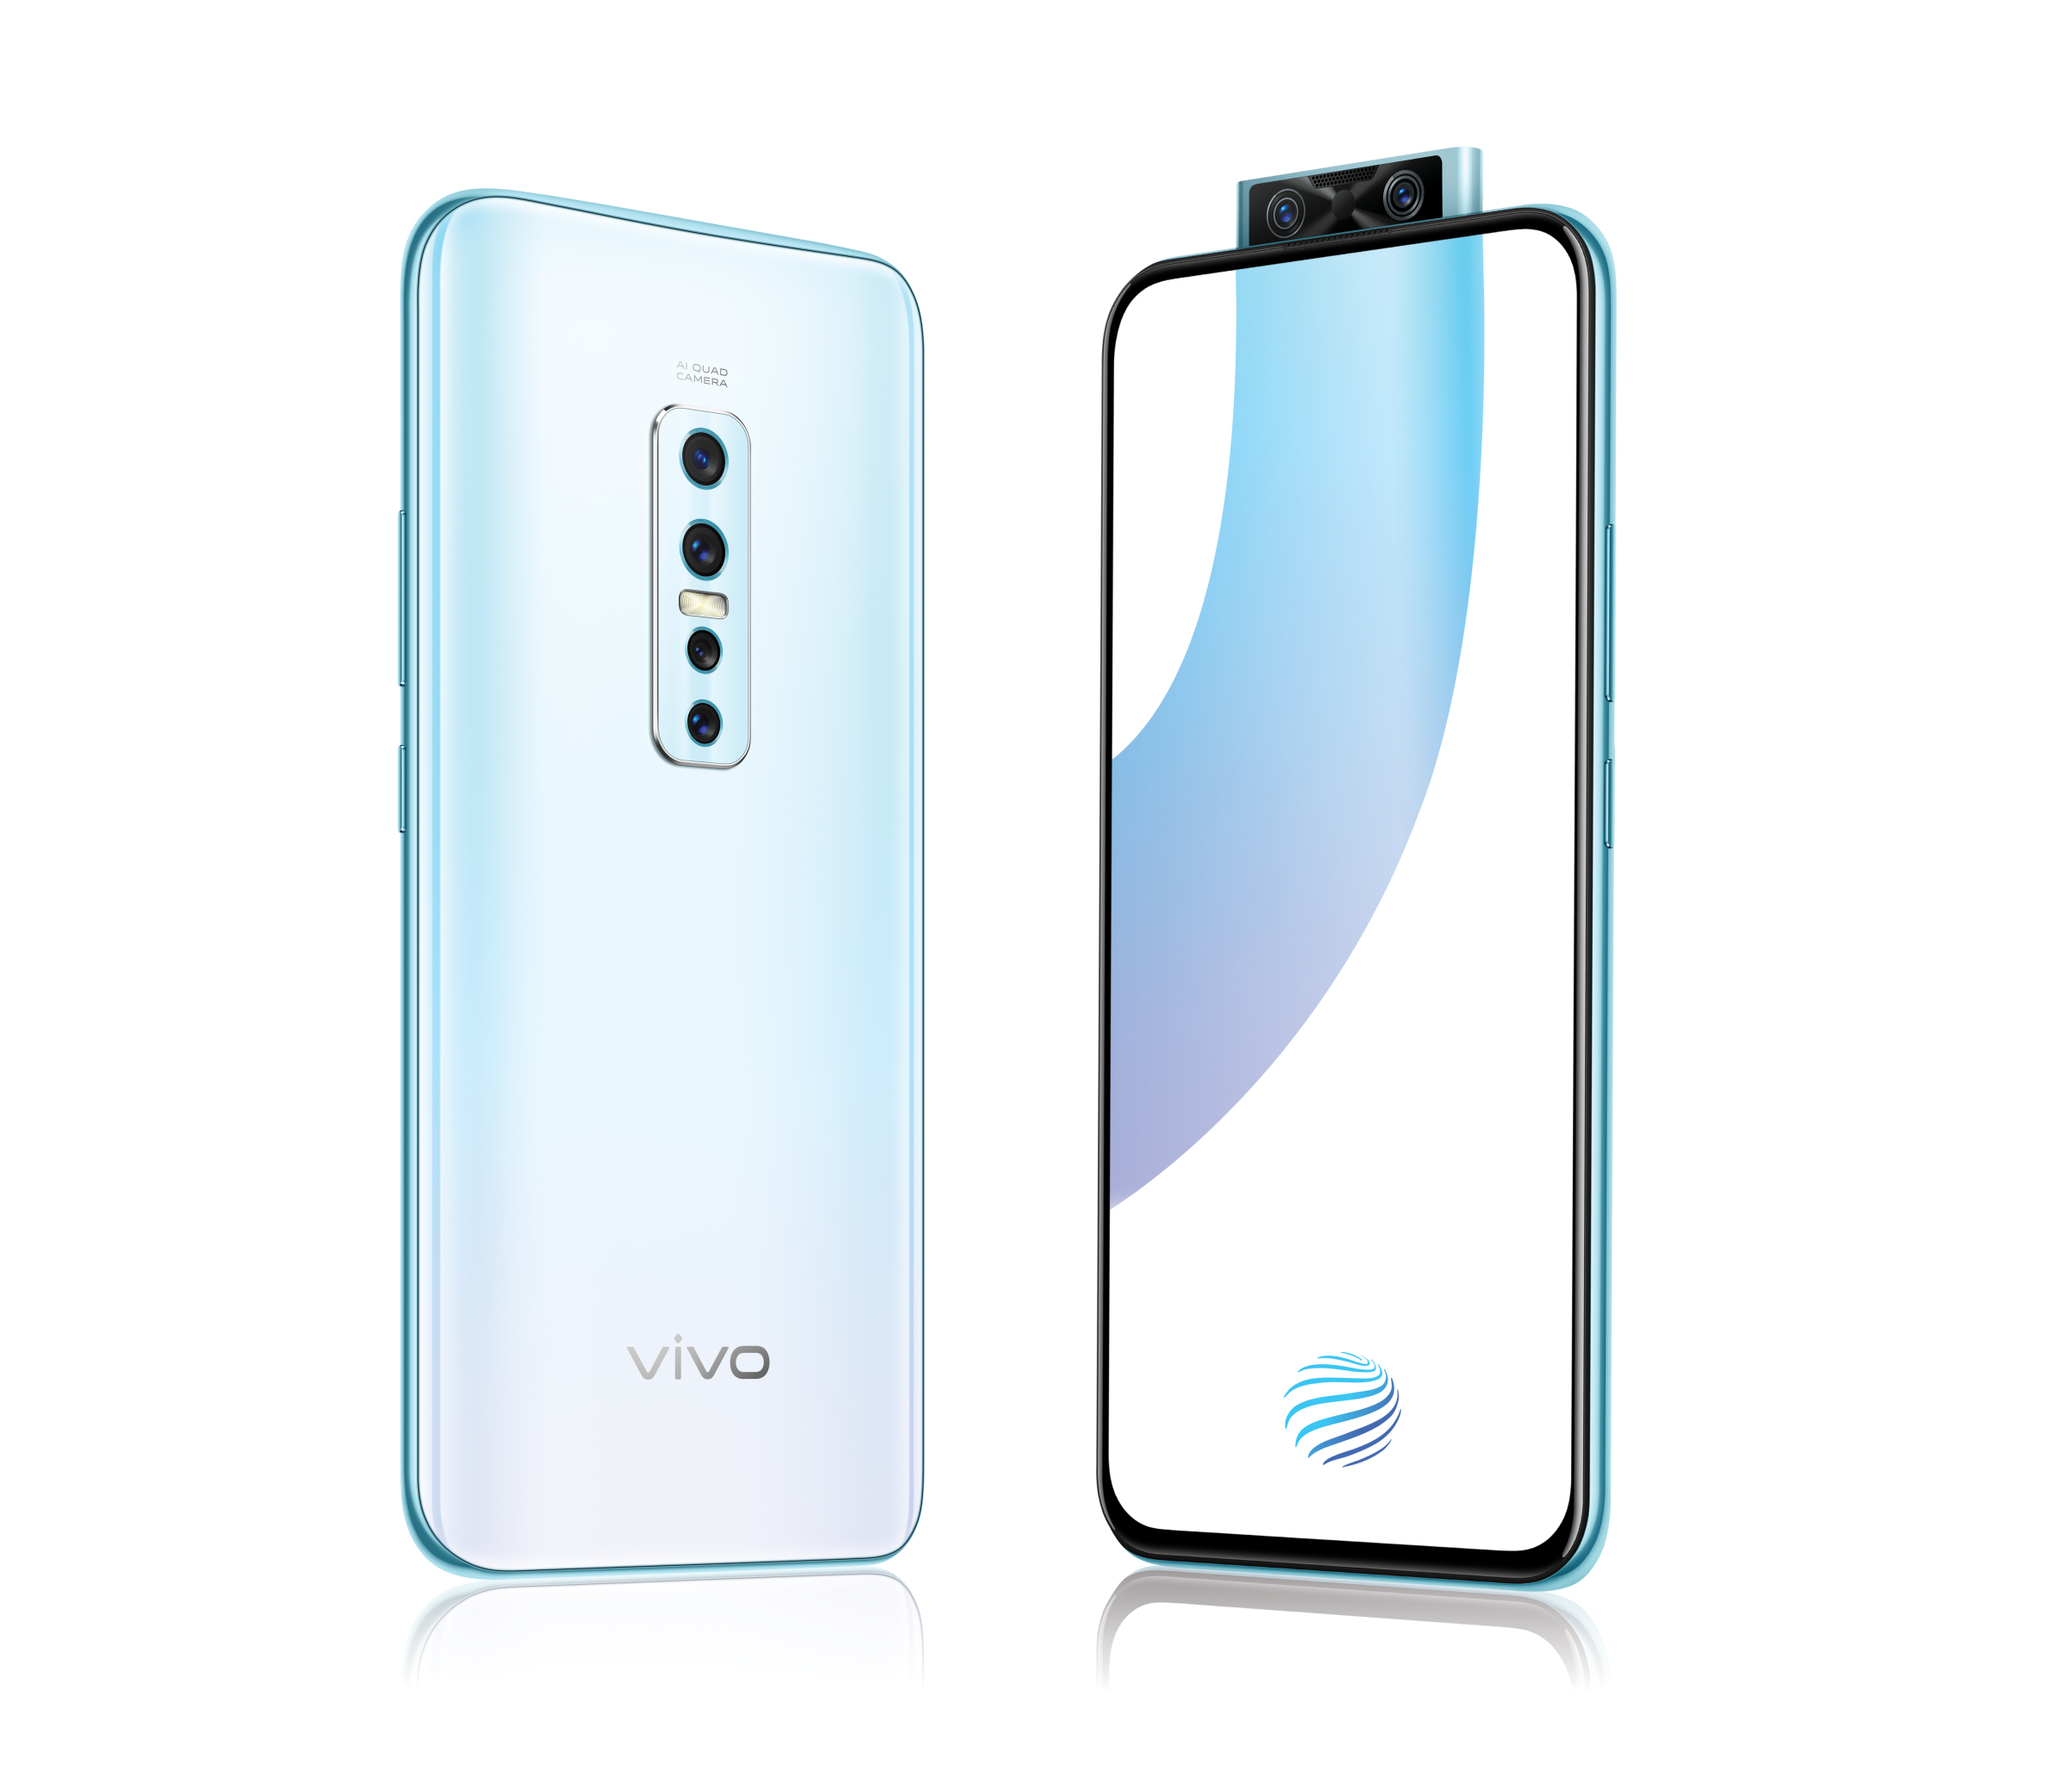 Vivo V17 Pro camera specs emerge ahead of launch